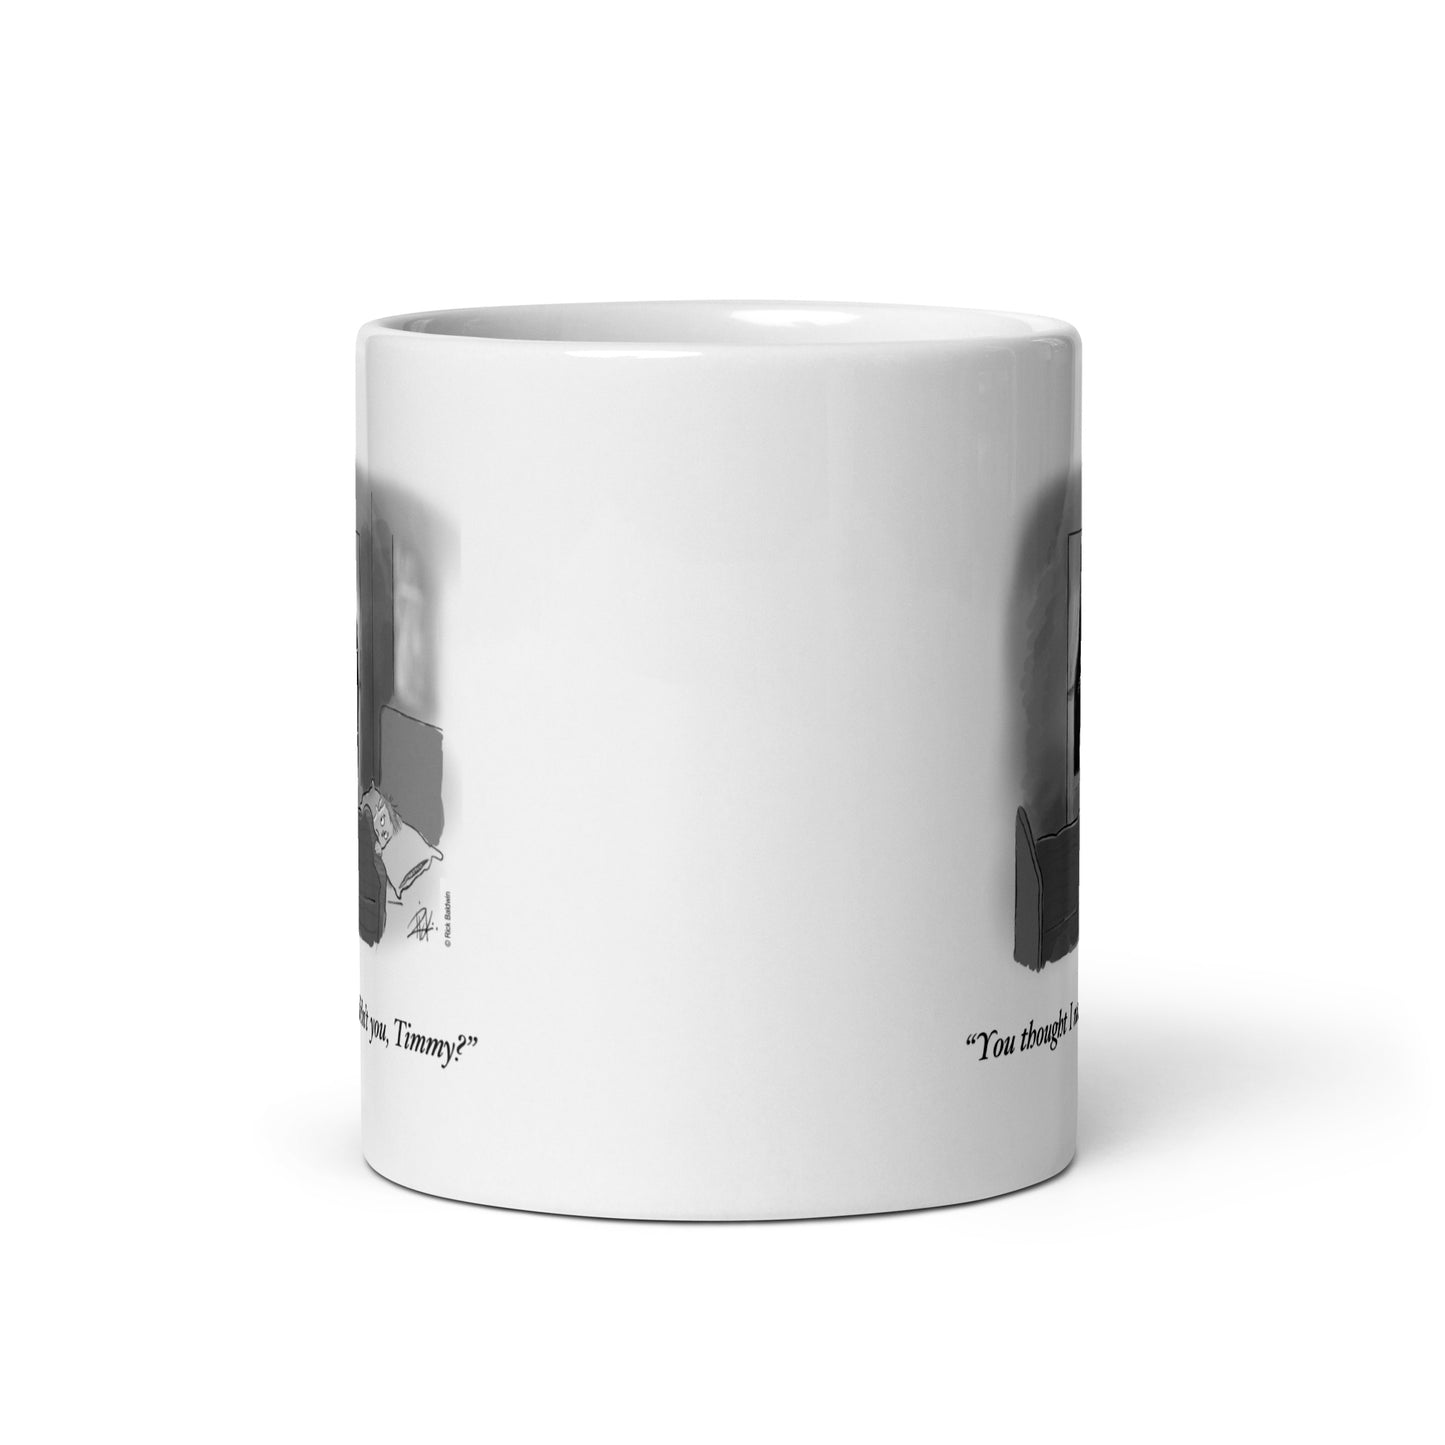 Melted - White Glossy Mug